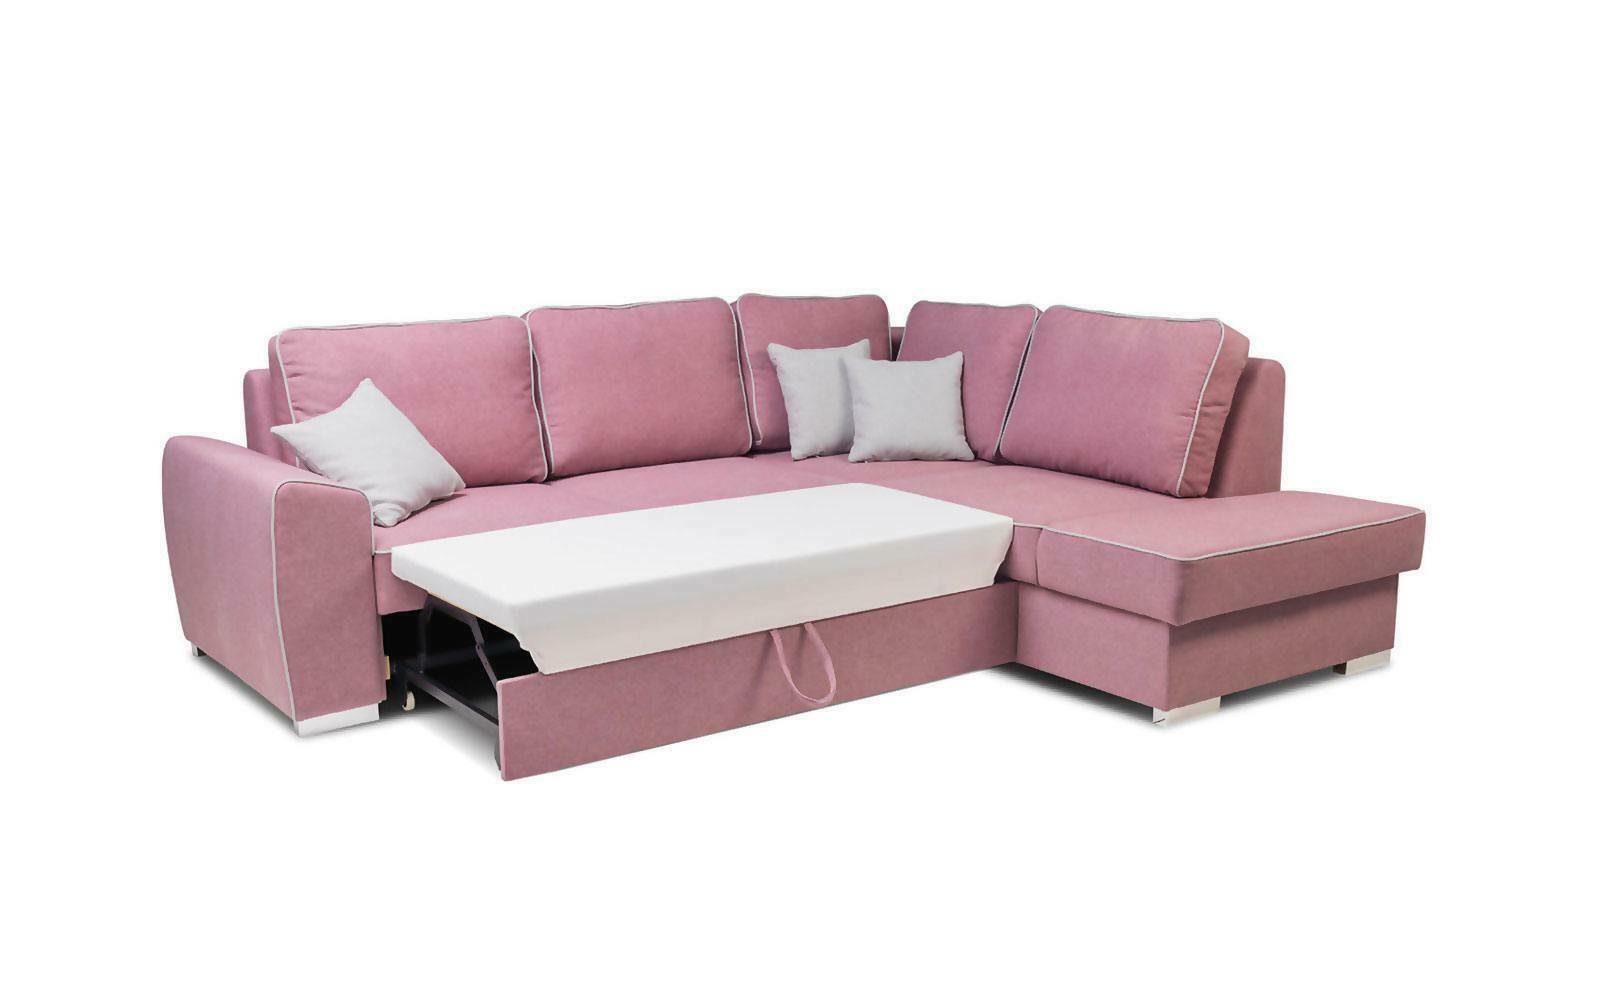 JVmoebel Ecksofa Modernes Altrosa Couch Ecksofa Luxus Europe Made mit in Bettfunktion Stilvoll